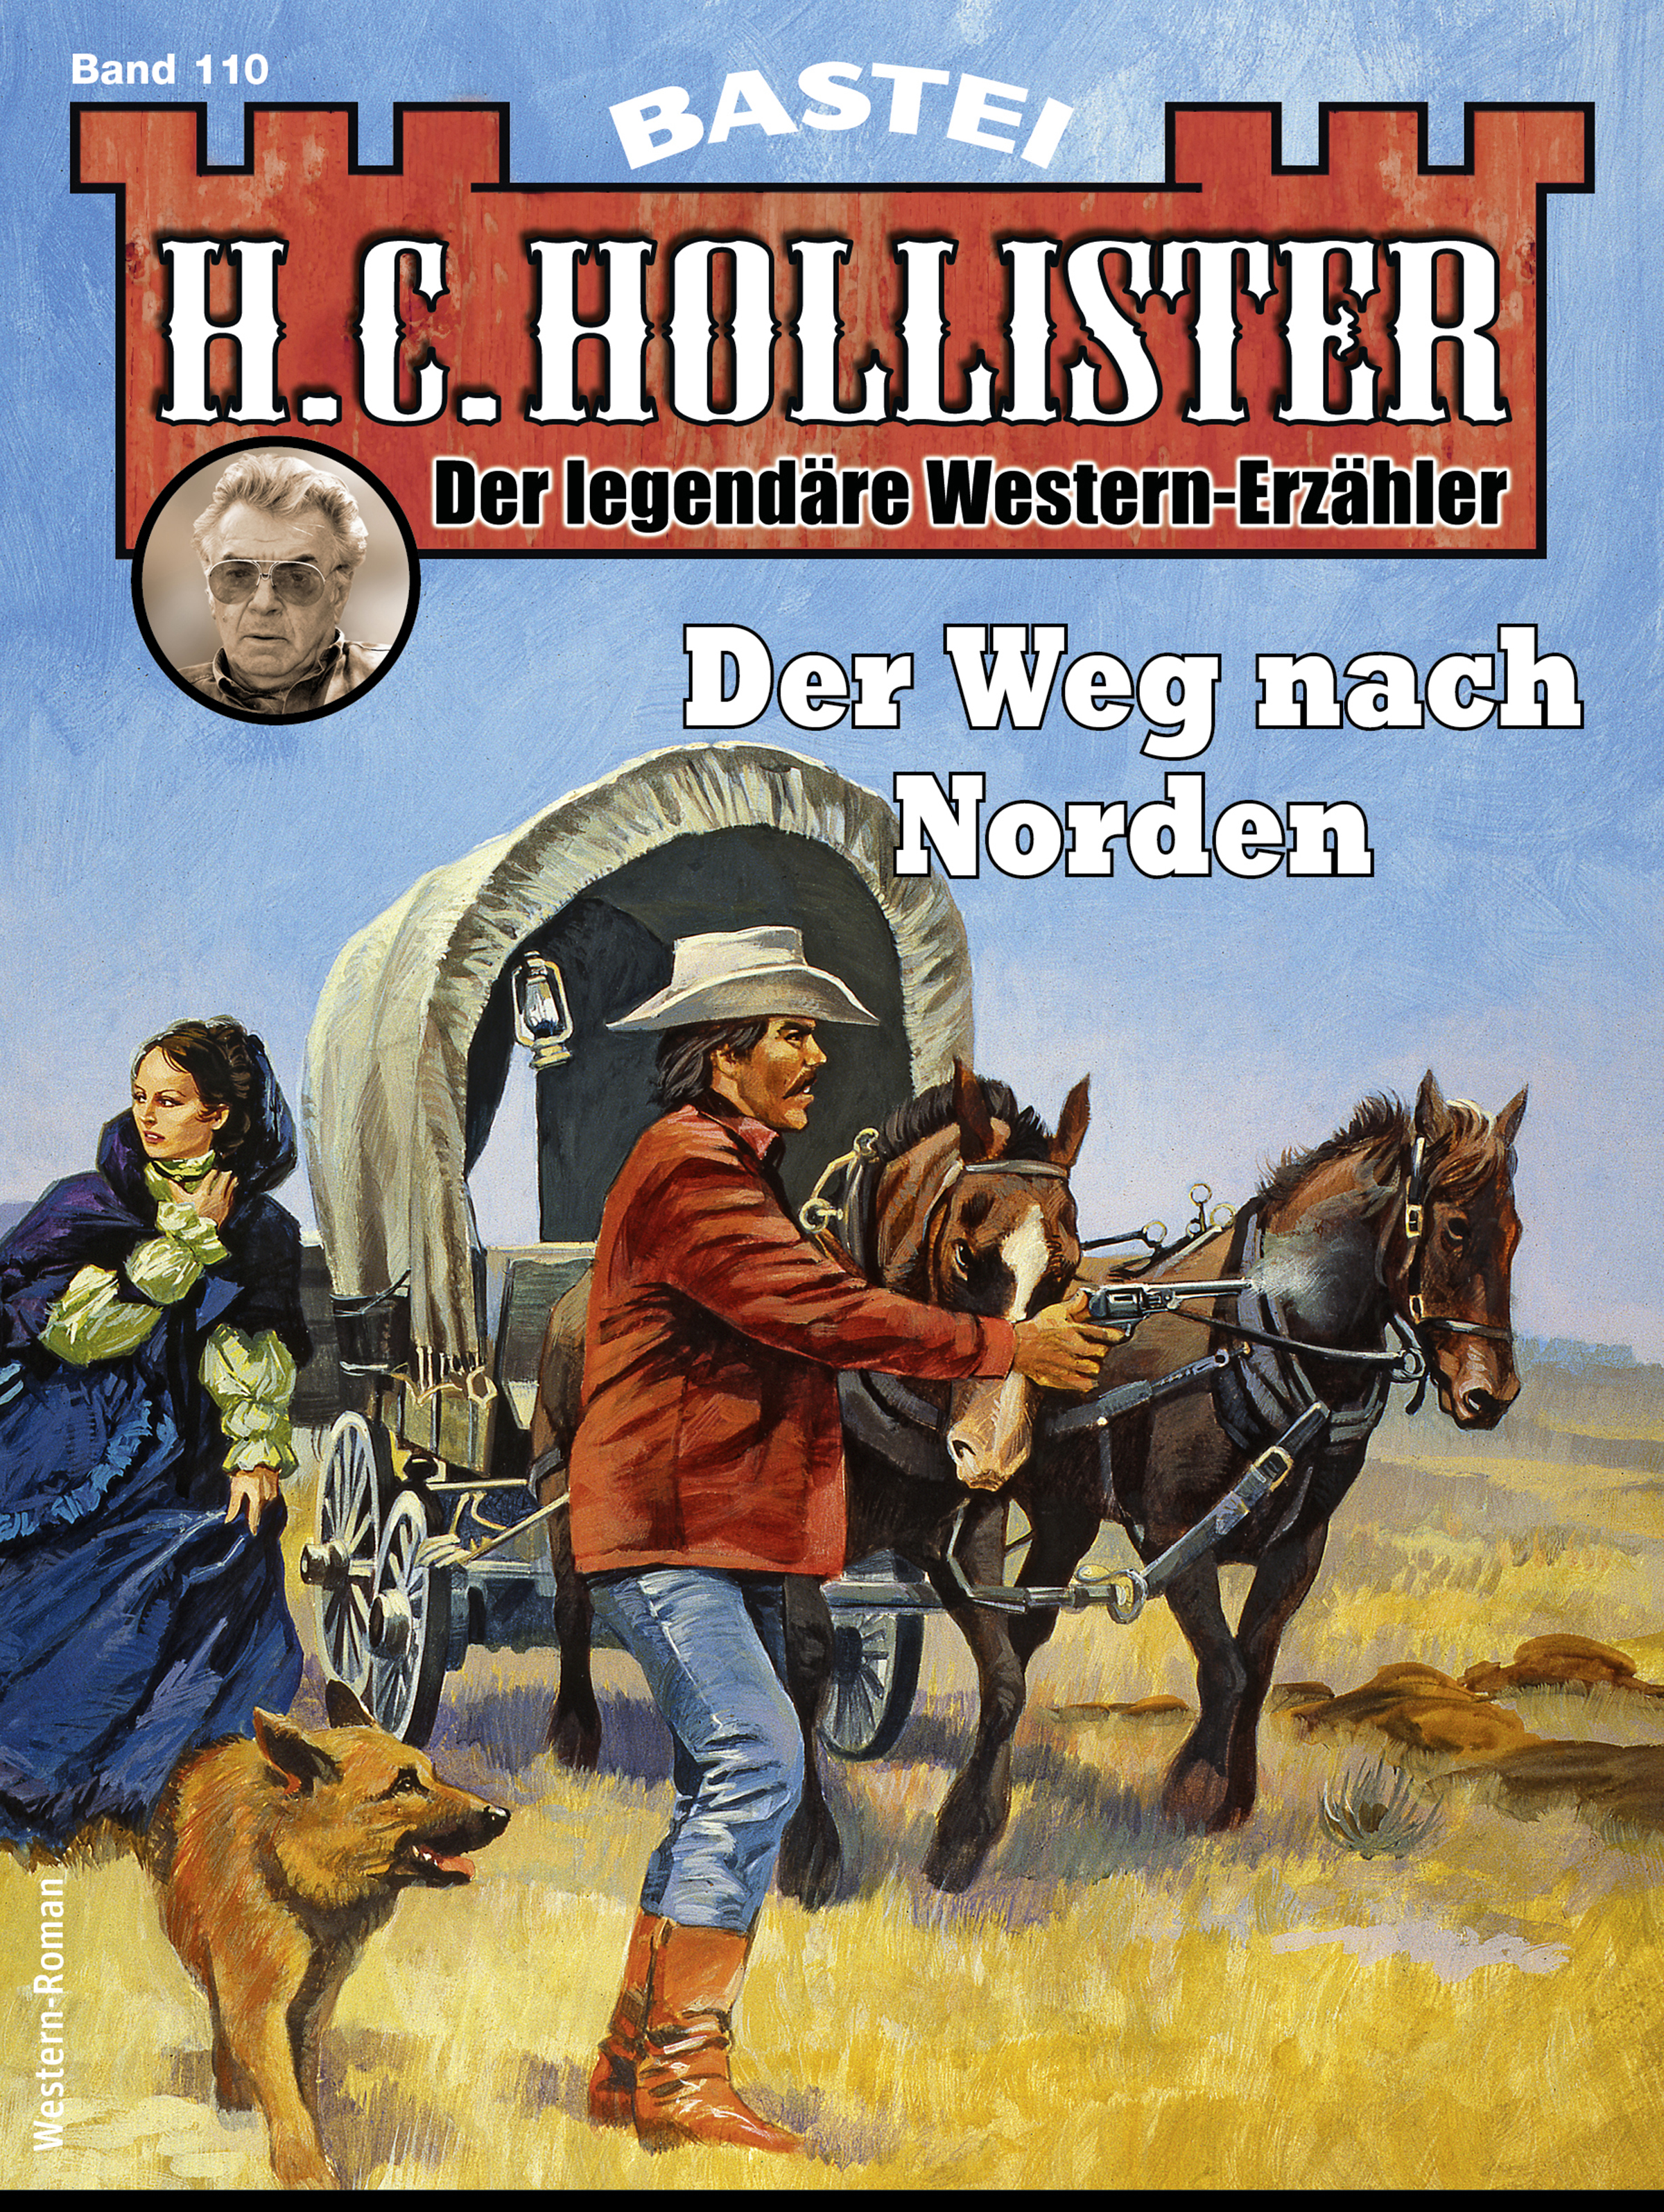 H. C. Hollister